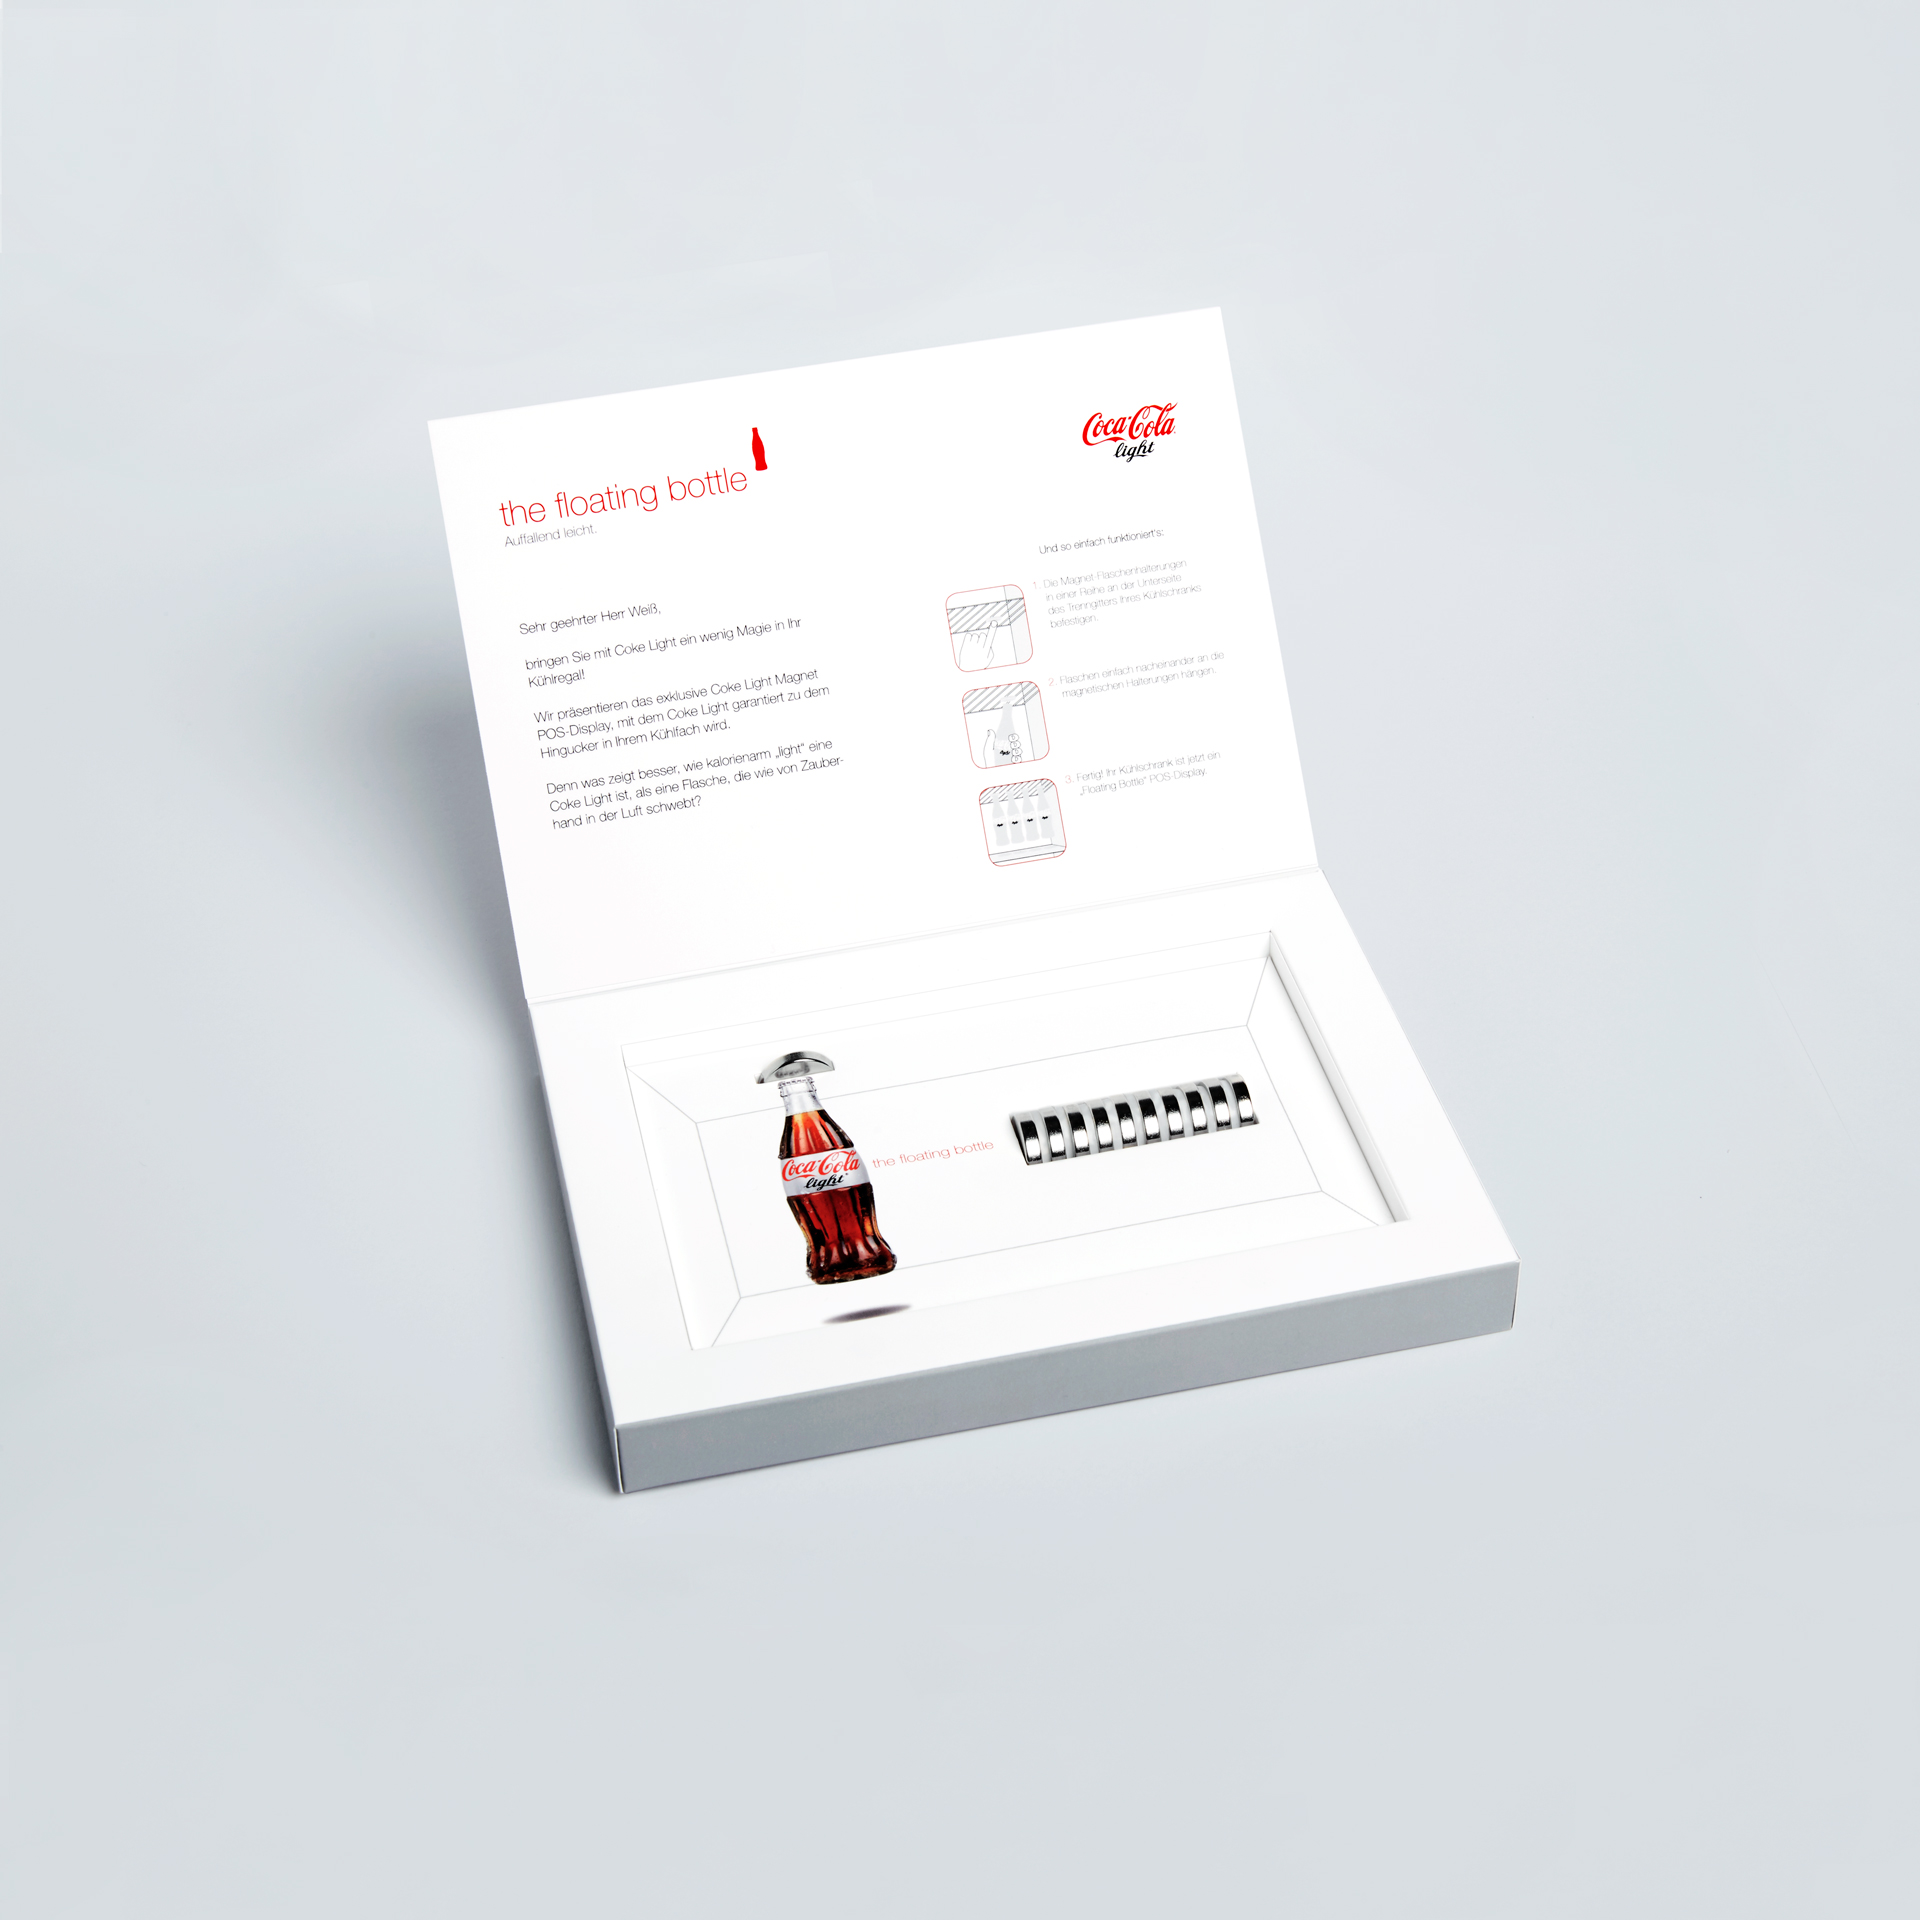 coca-cola light packaging design of mailing